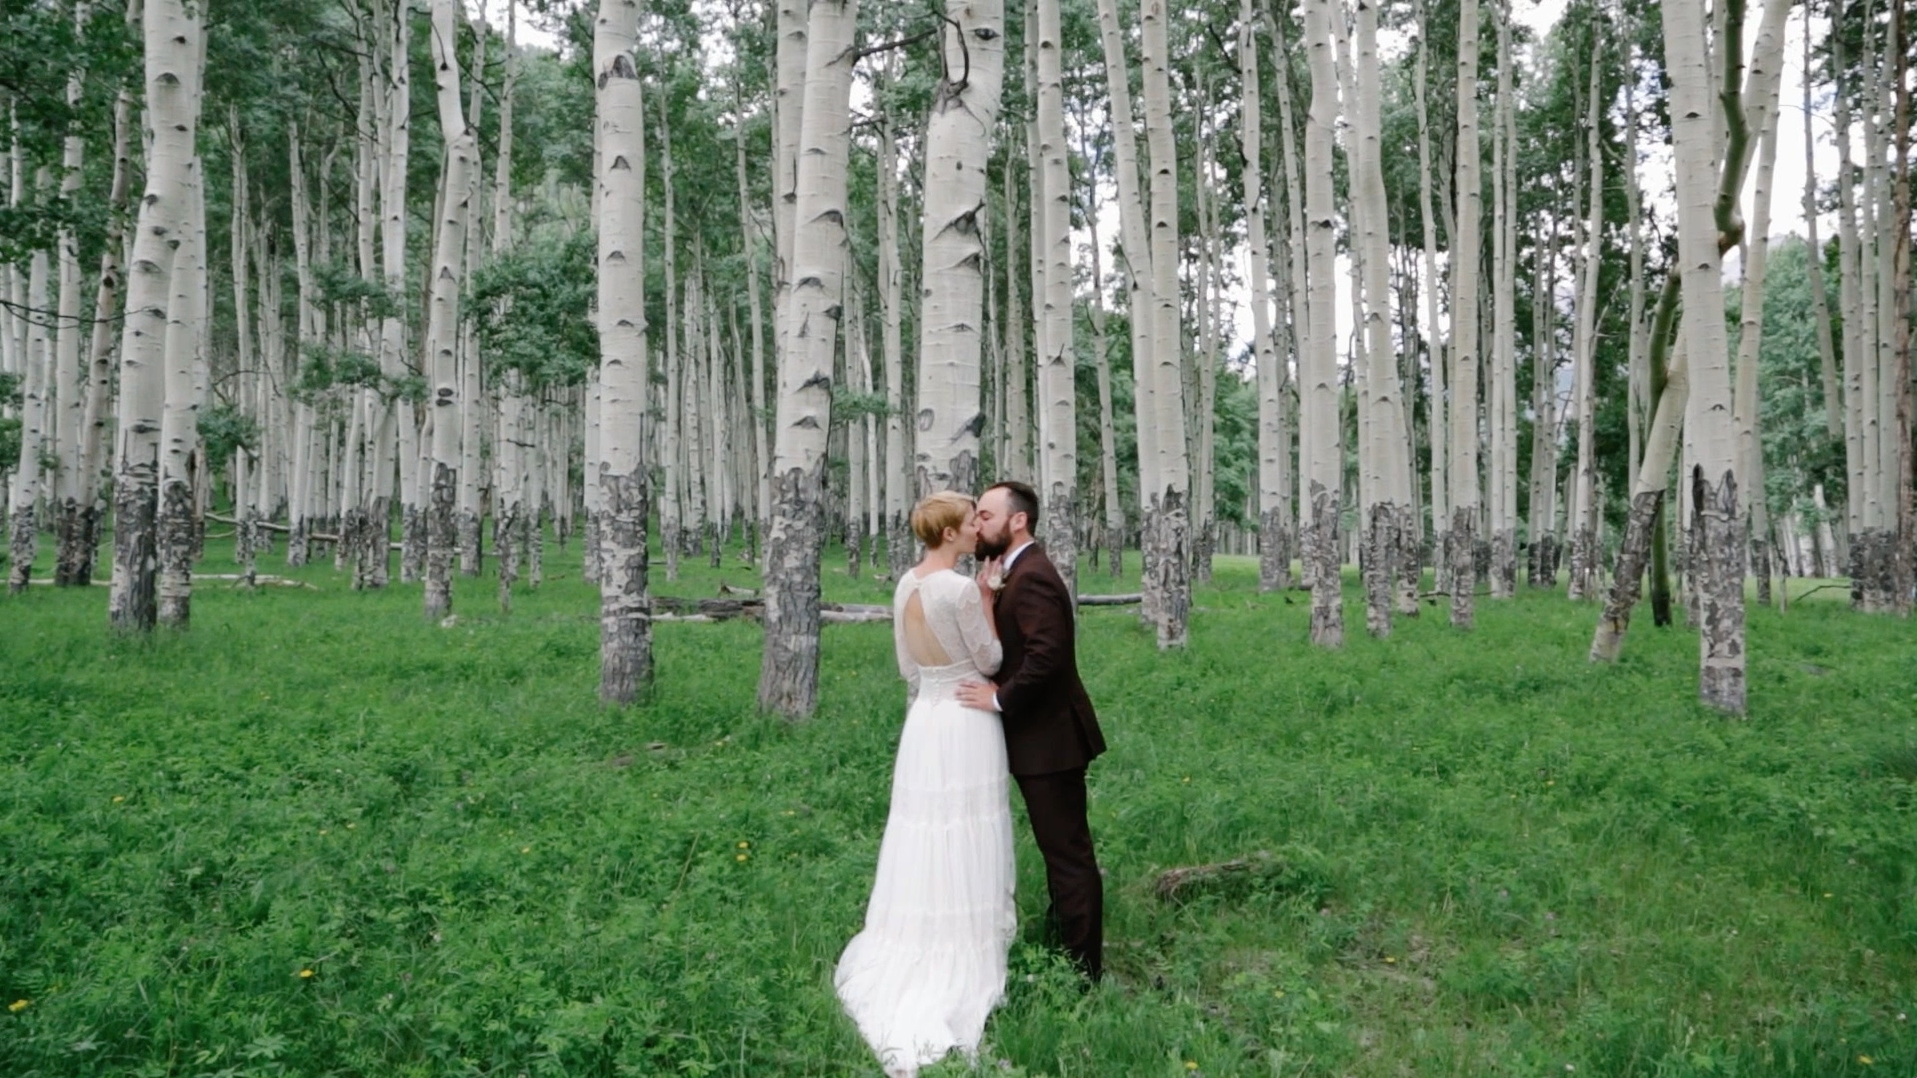 Wedding Videography from LoveBrain Films